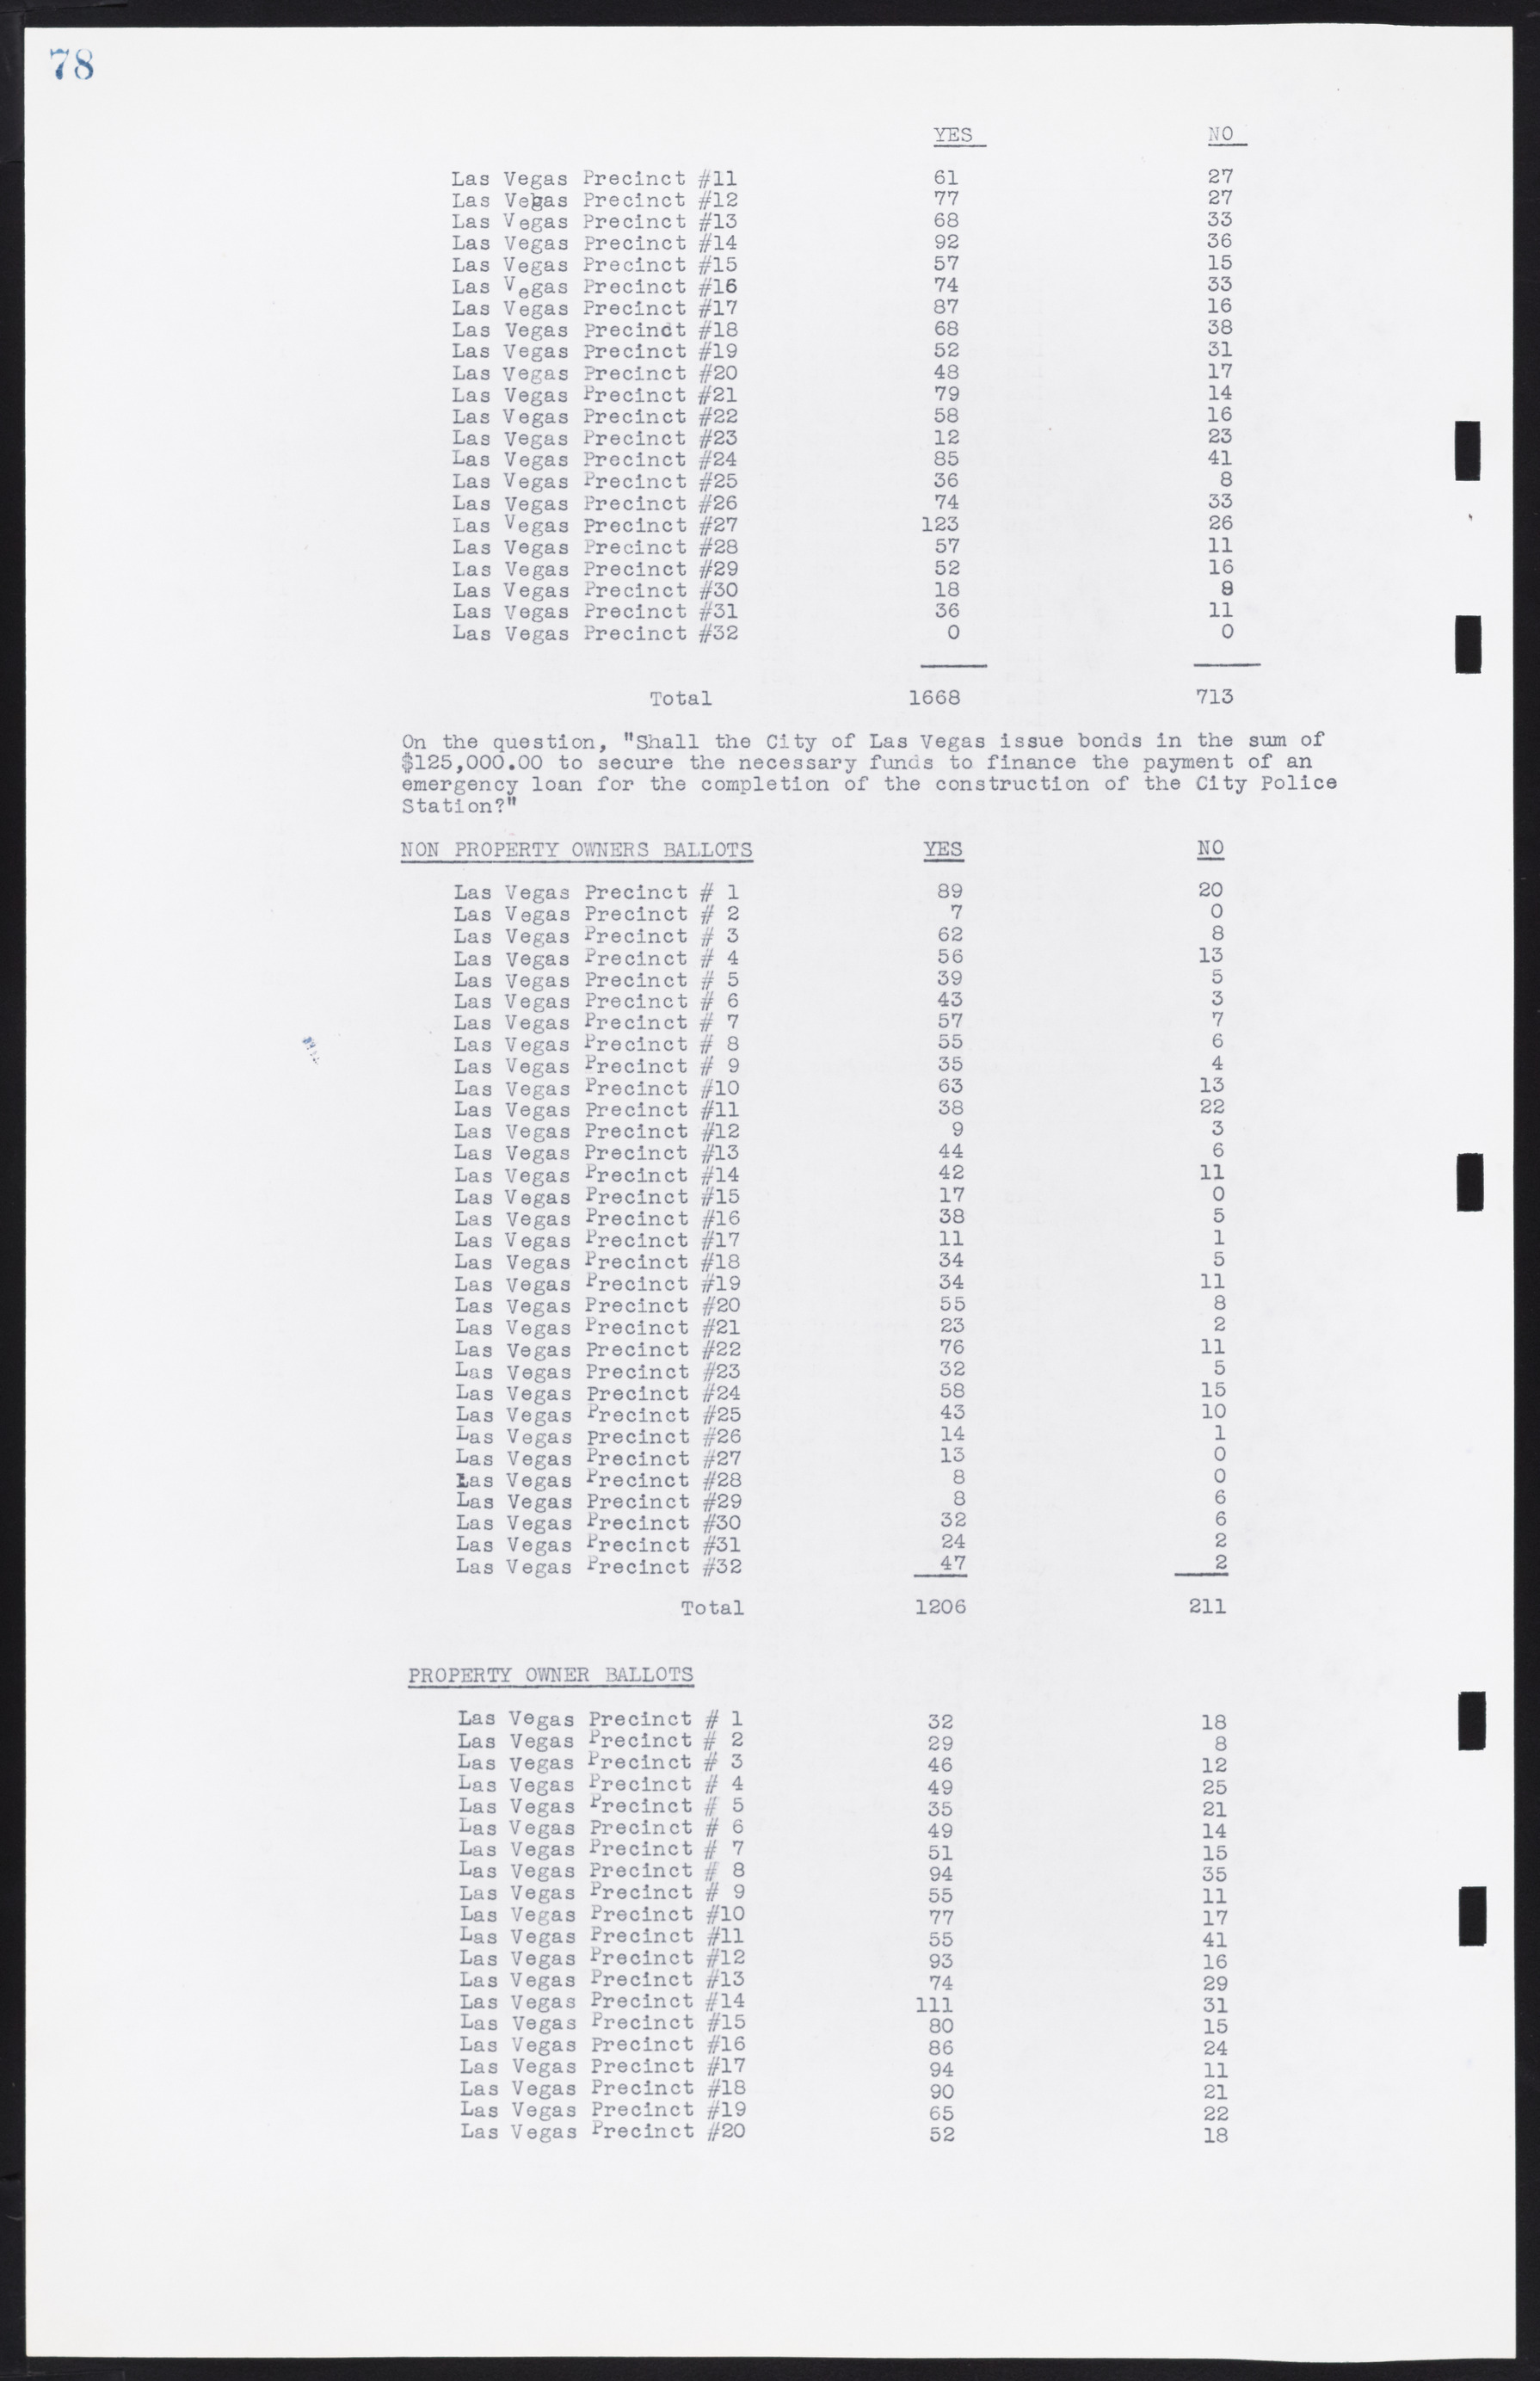 Las Vegas City Commission Minutes, January 7, 1947 to October 26, 1949, lvc000006-93